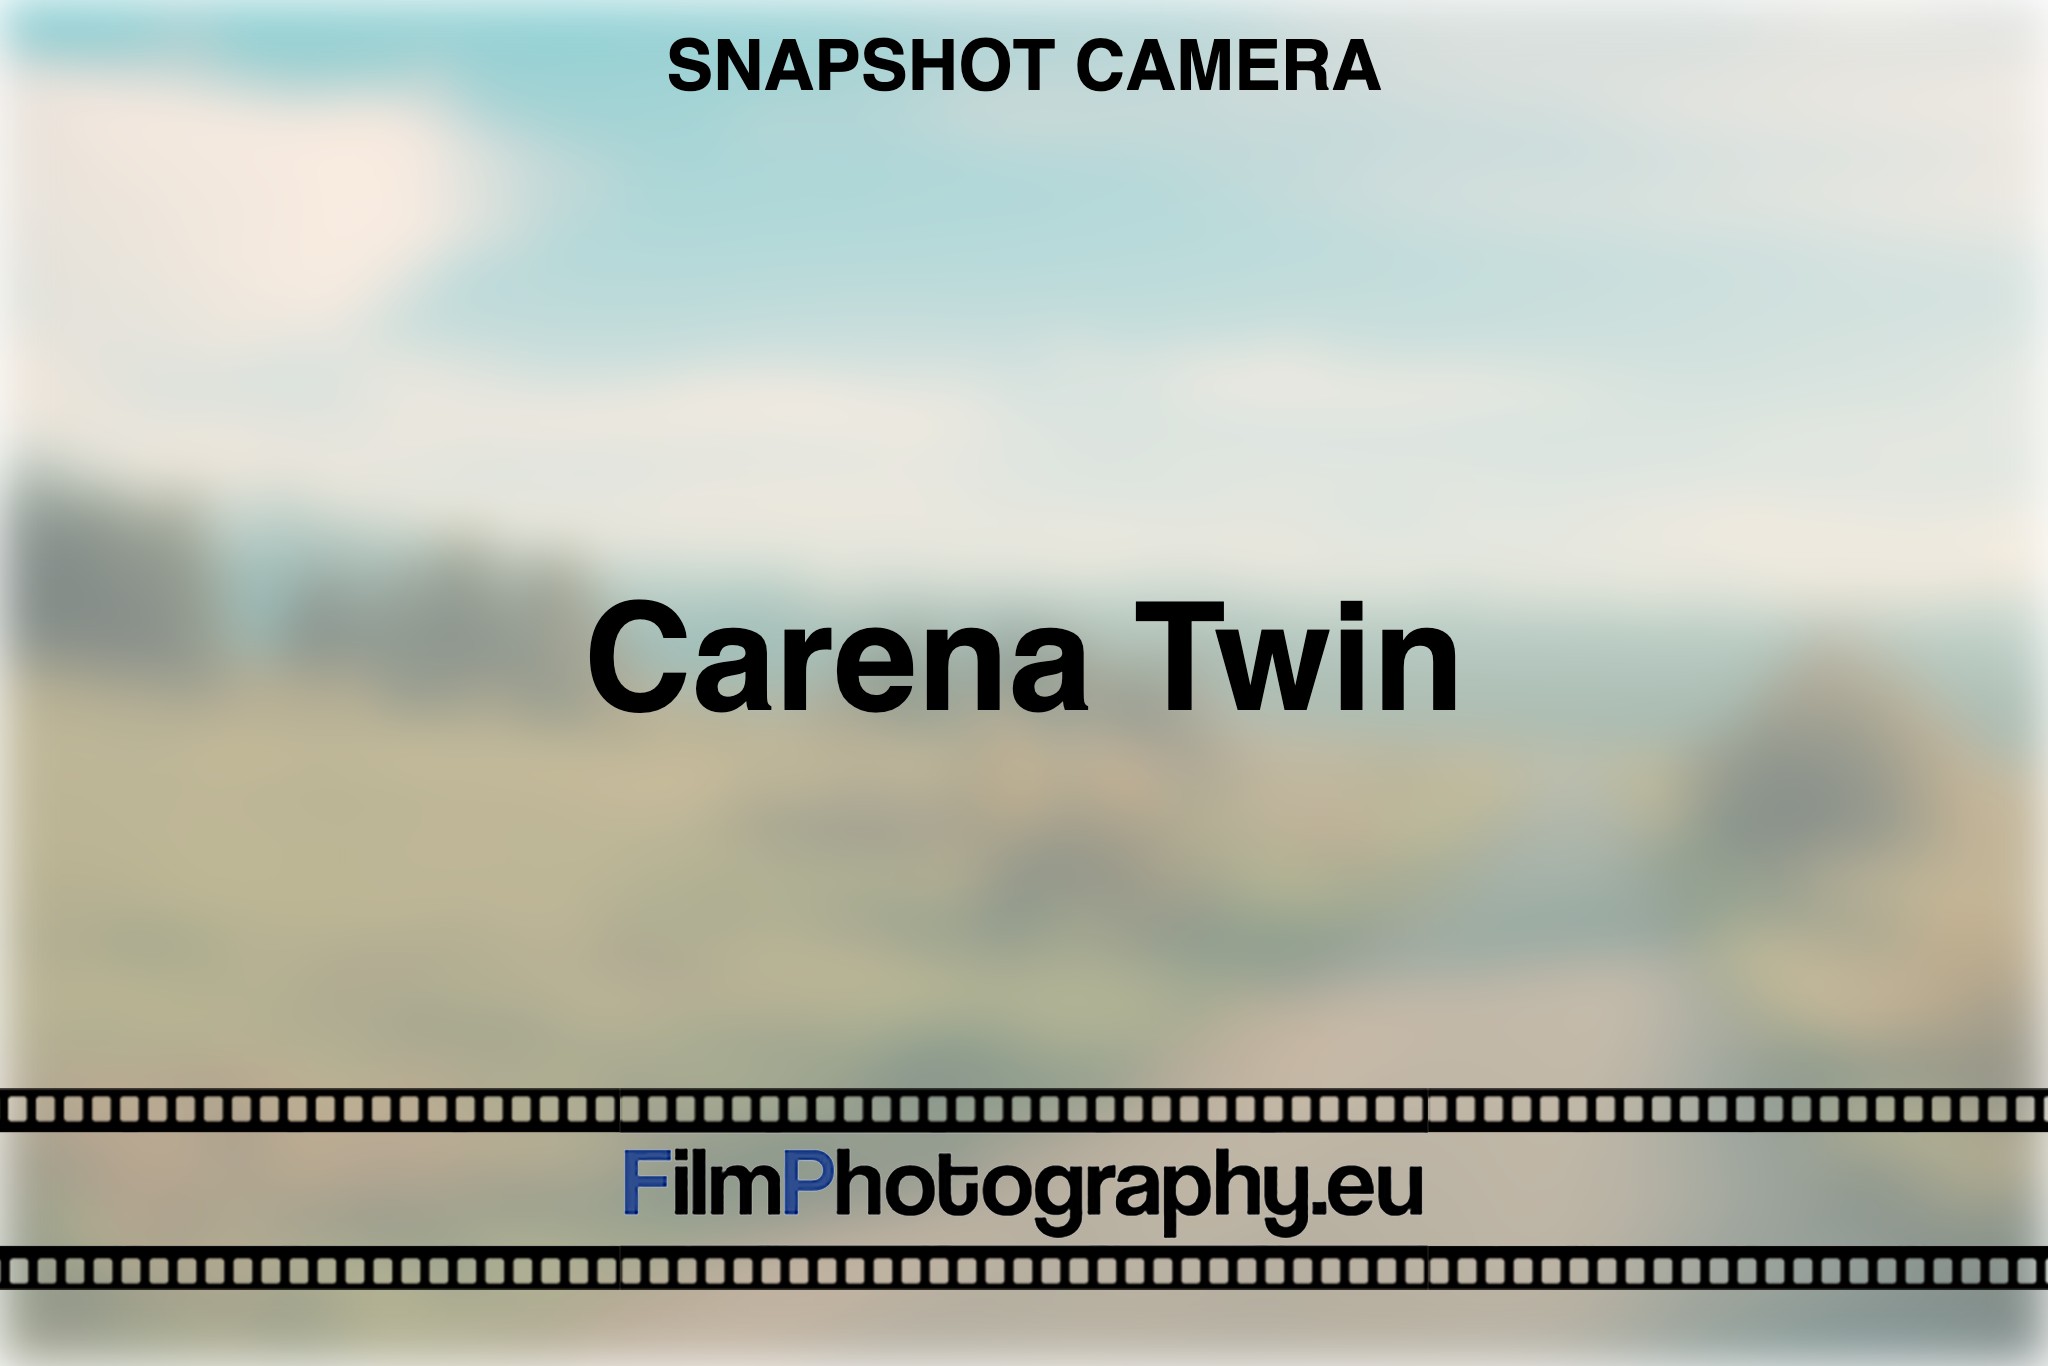 carena-twin-snapshot-camera-bnv